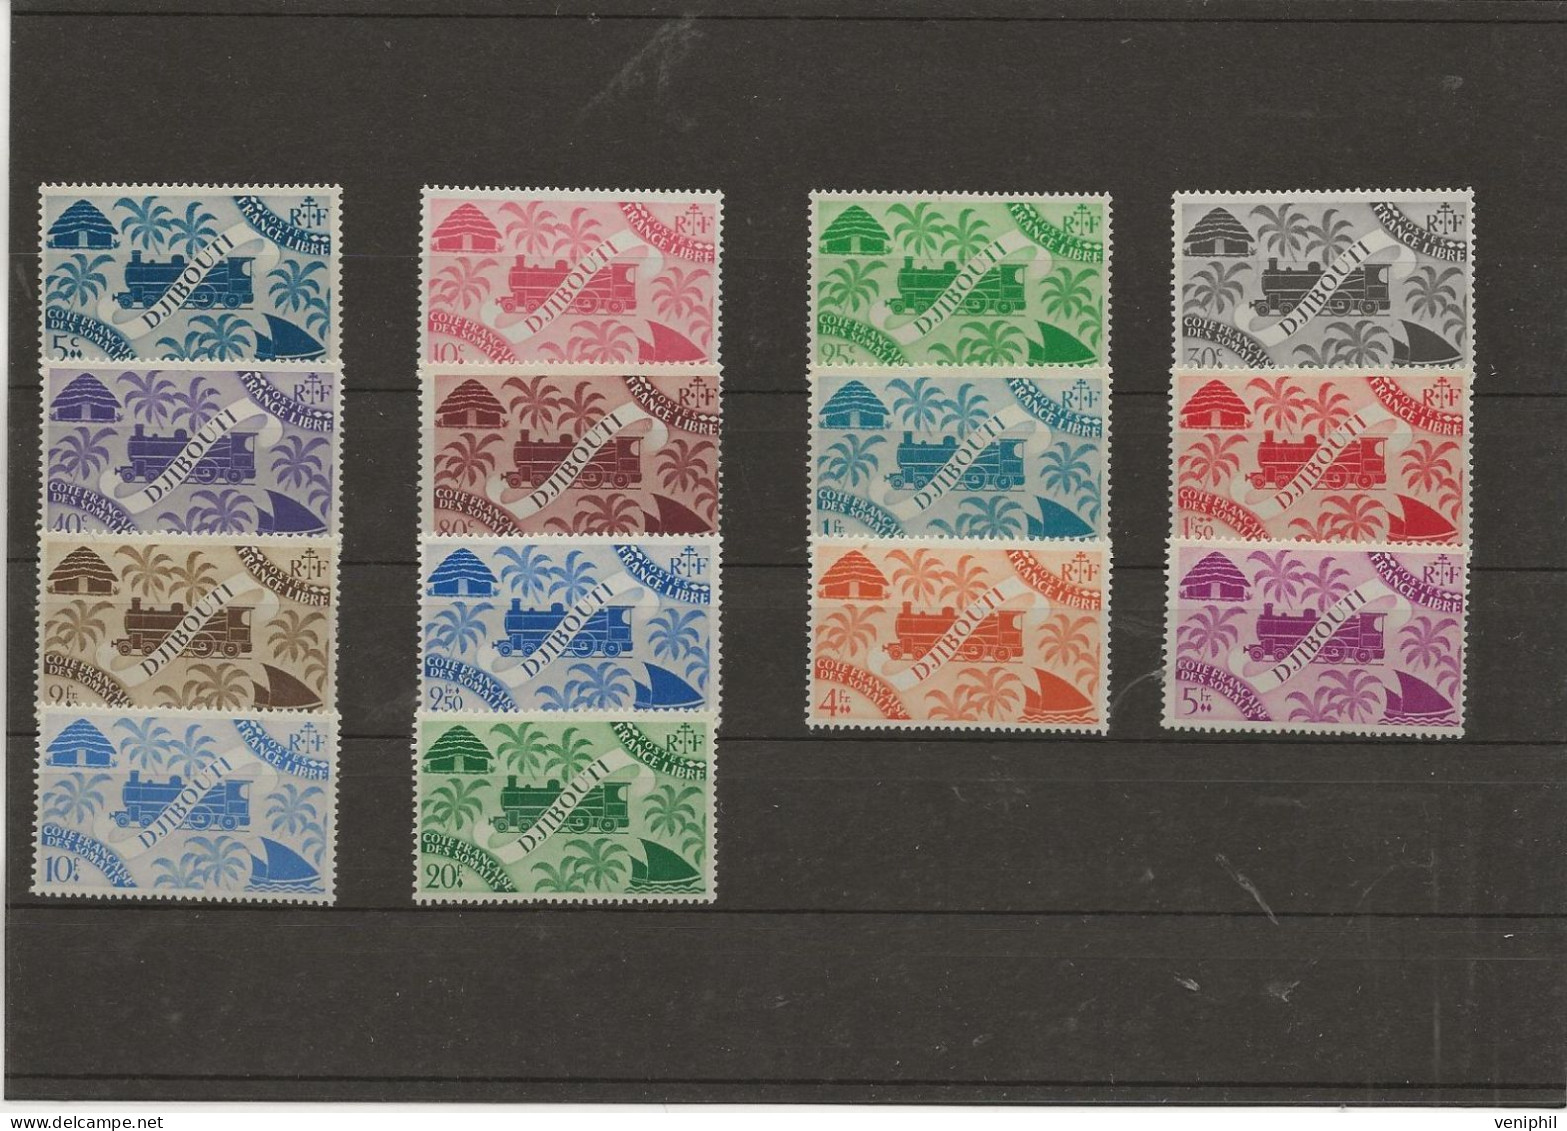 COTE DES SOMALIS - SERIE DE LONDRES - N°234  - 247 NEUF INFIME CHARNIERE - ANNEE 1943 -  COTE : 11 € - Unused Stamps